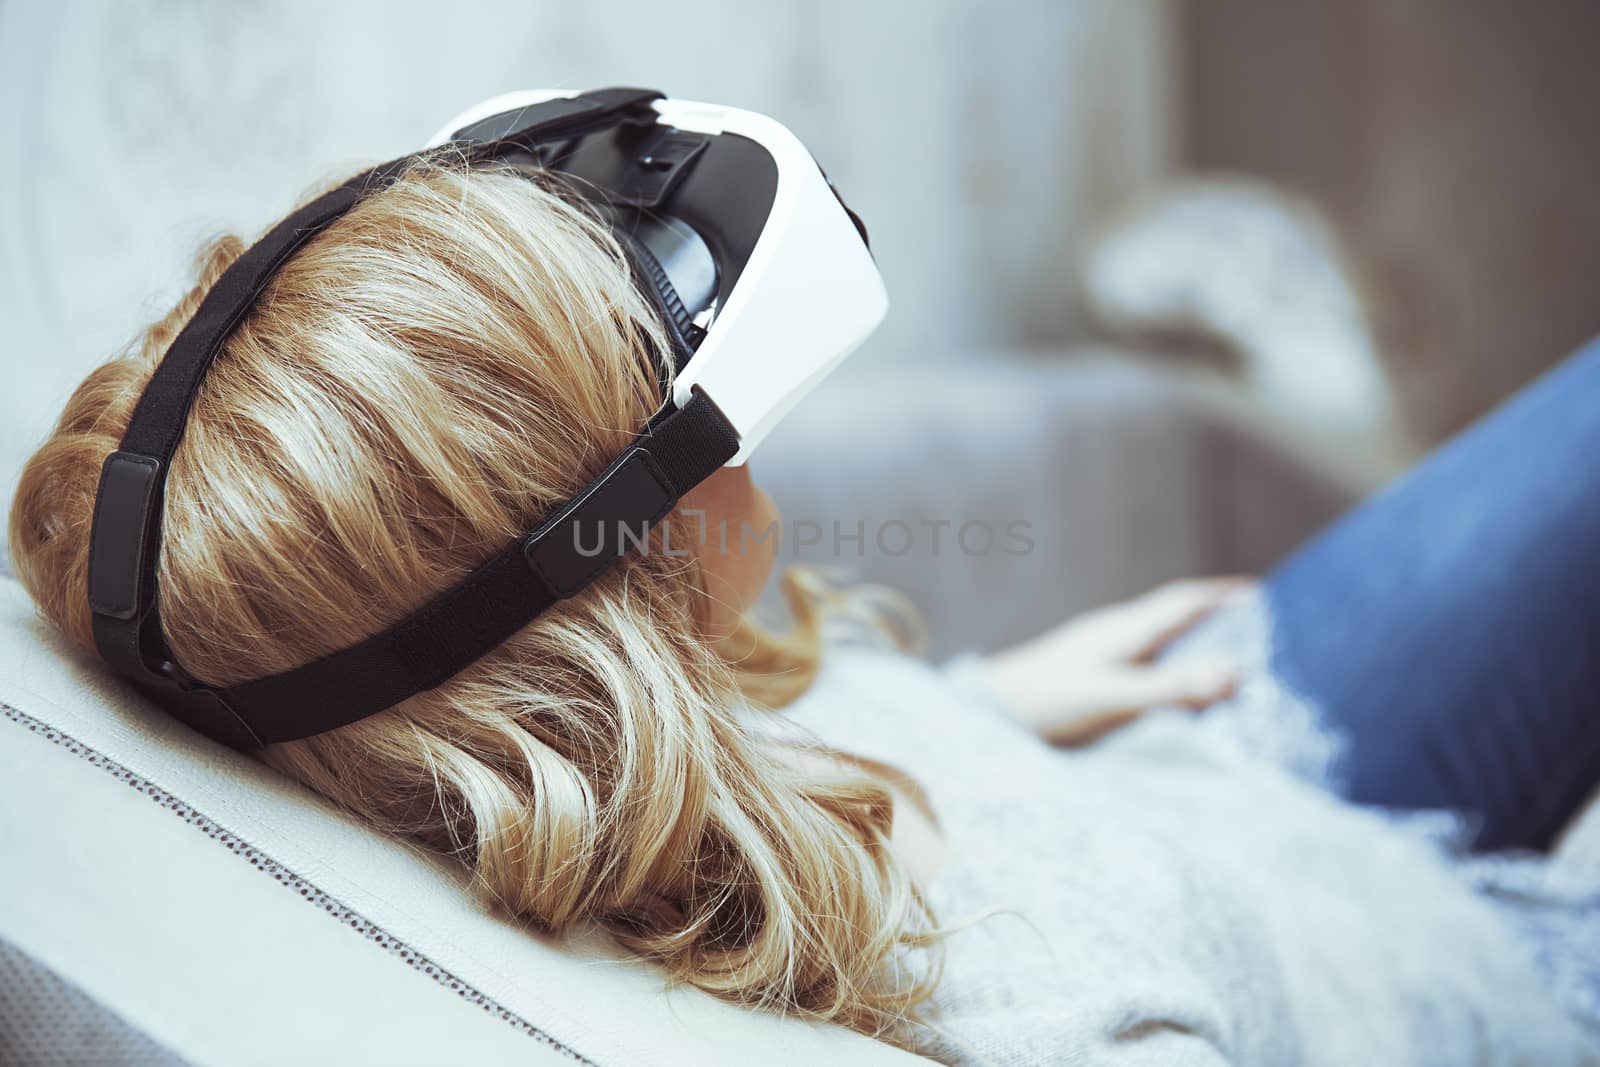 Woman wearing Virtual reality headset by Novic